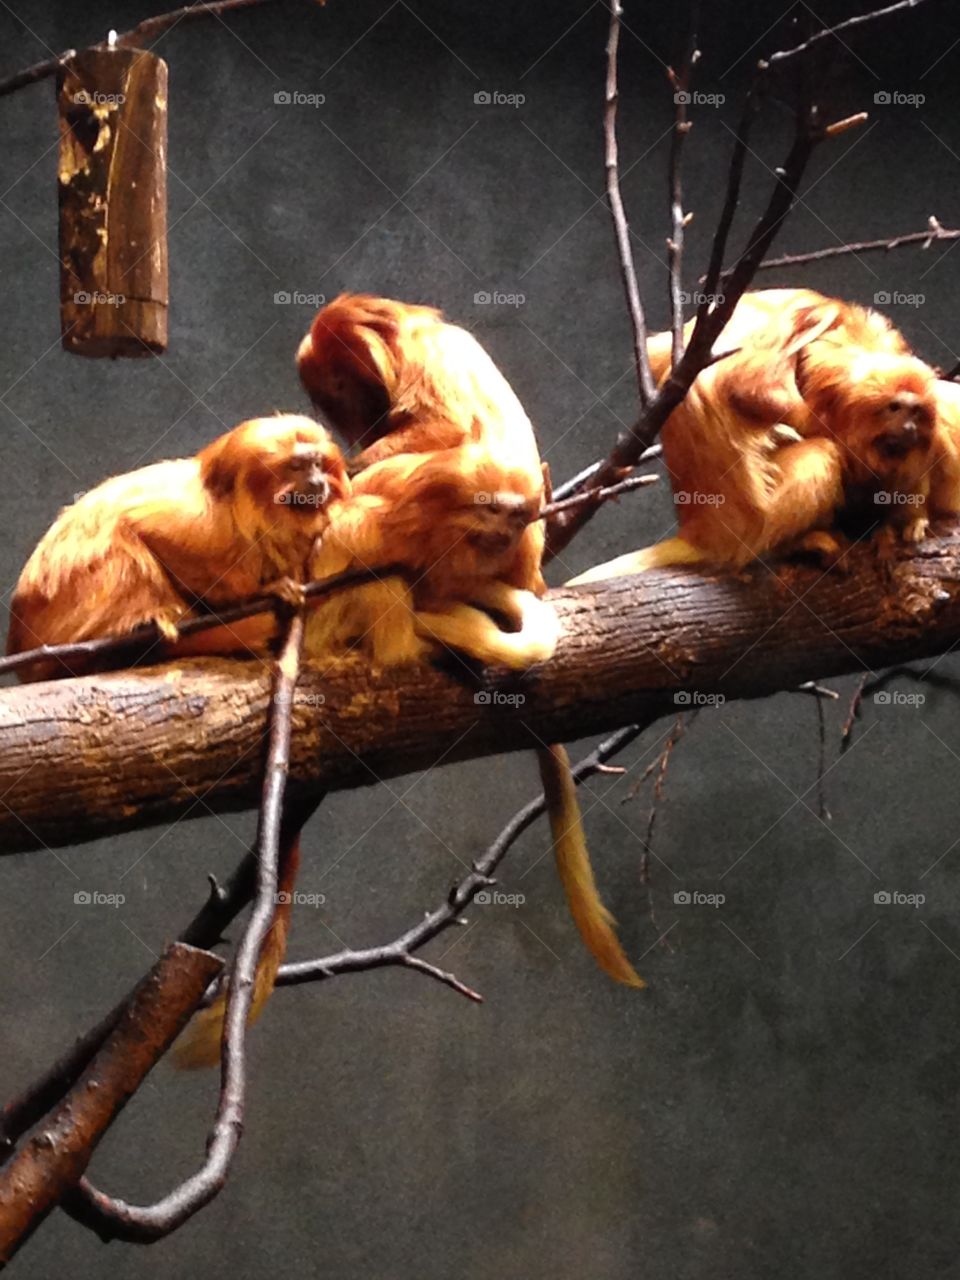 Monkeys in captivity